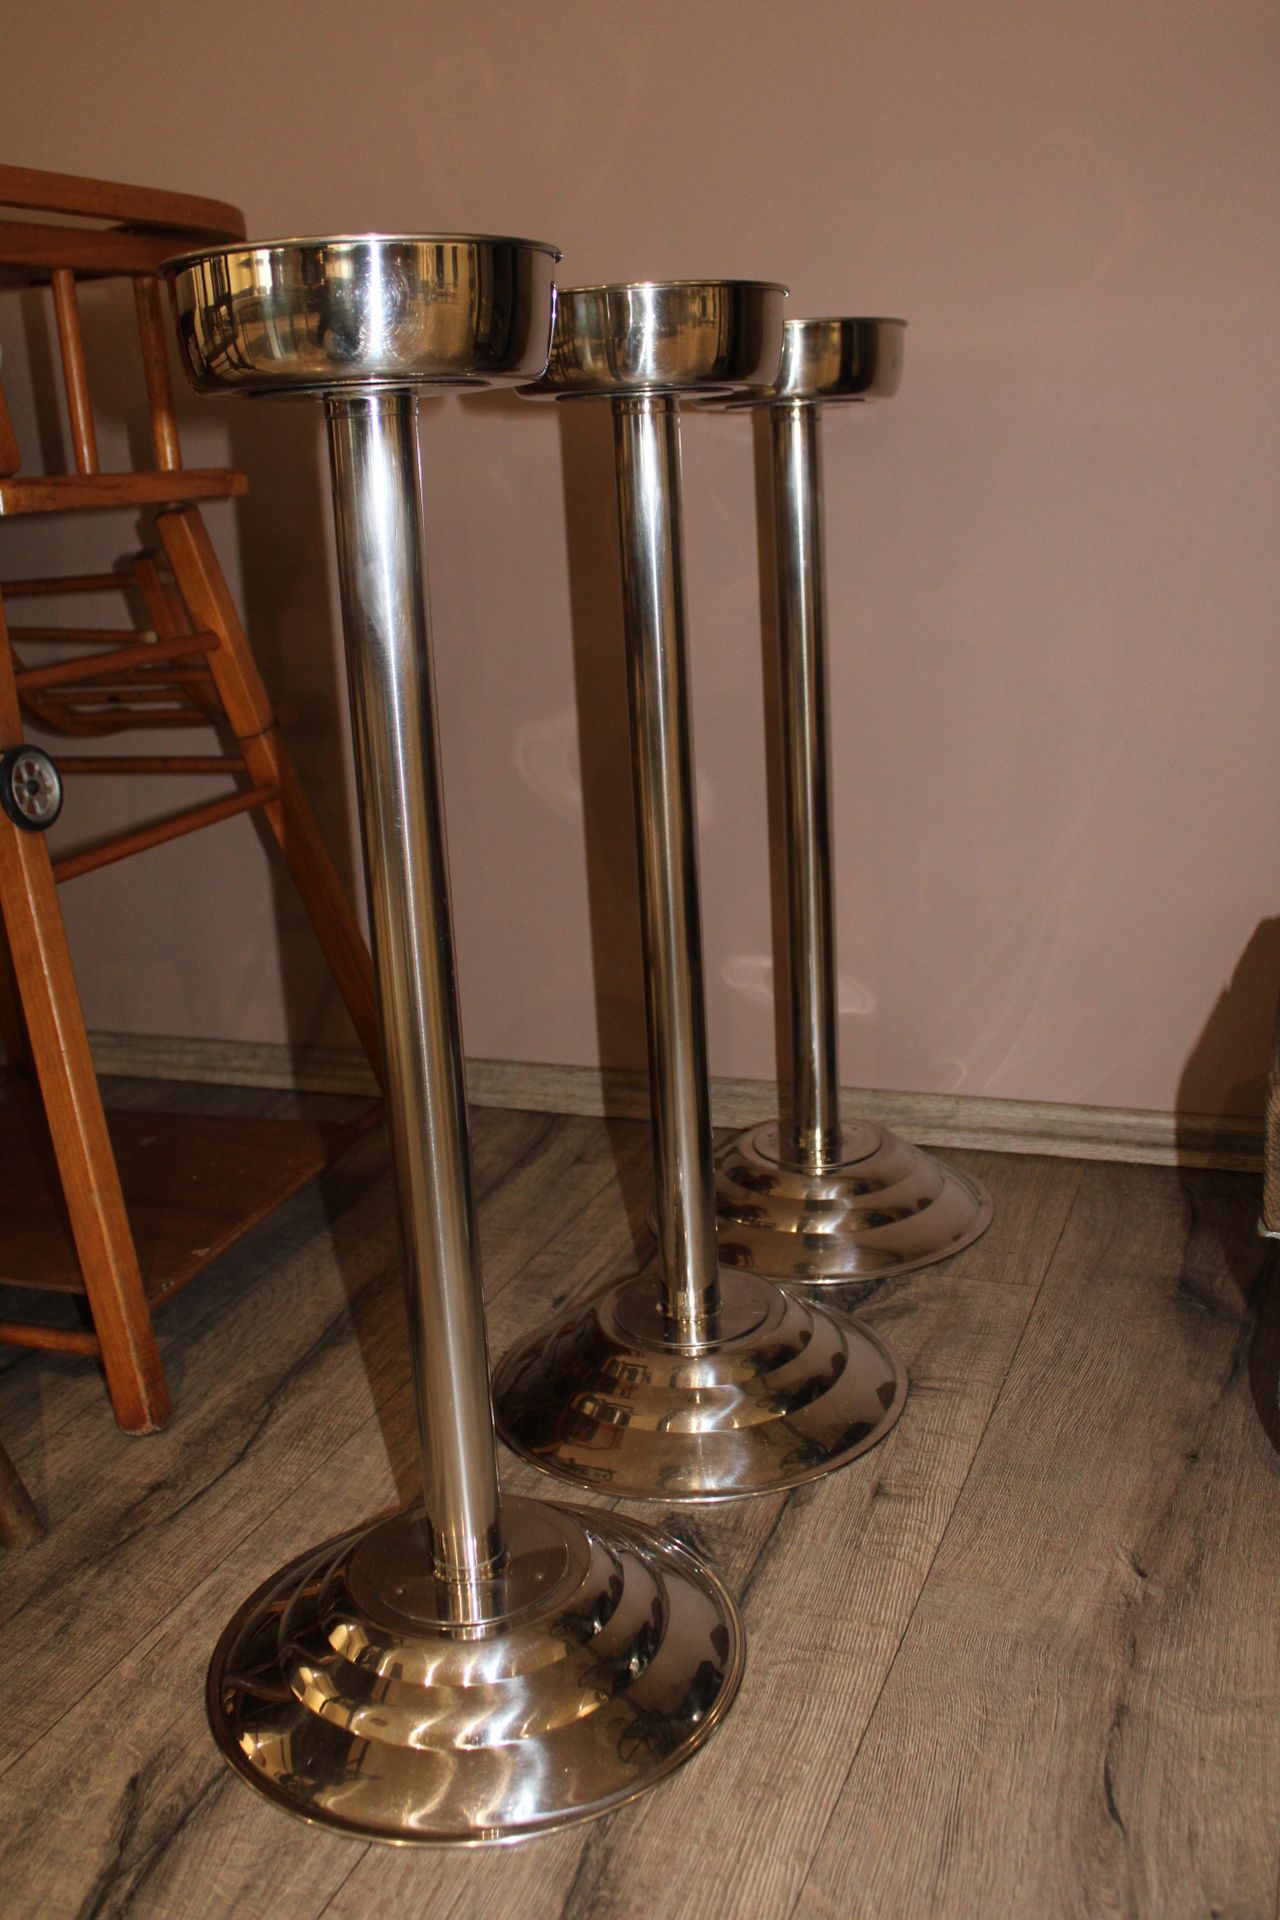 Null Three champagne bucket holders, chromed metal (66 cm high).